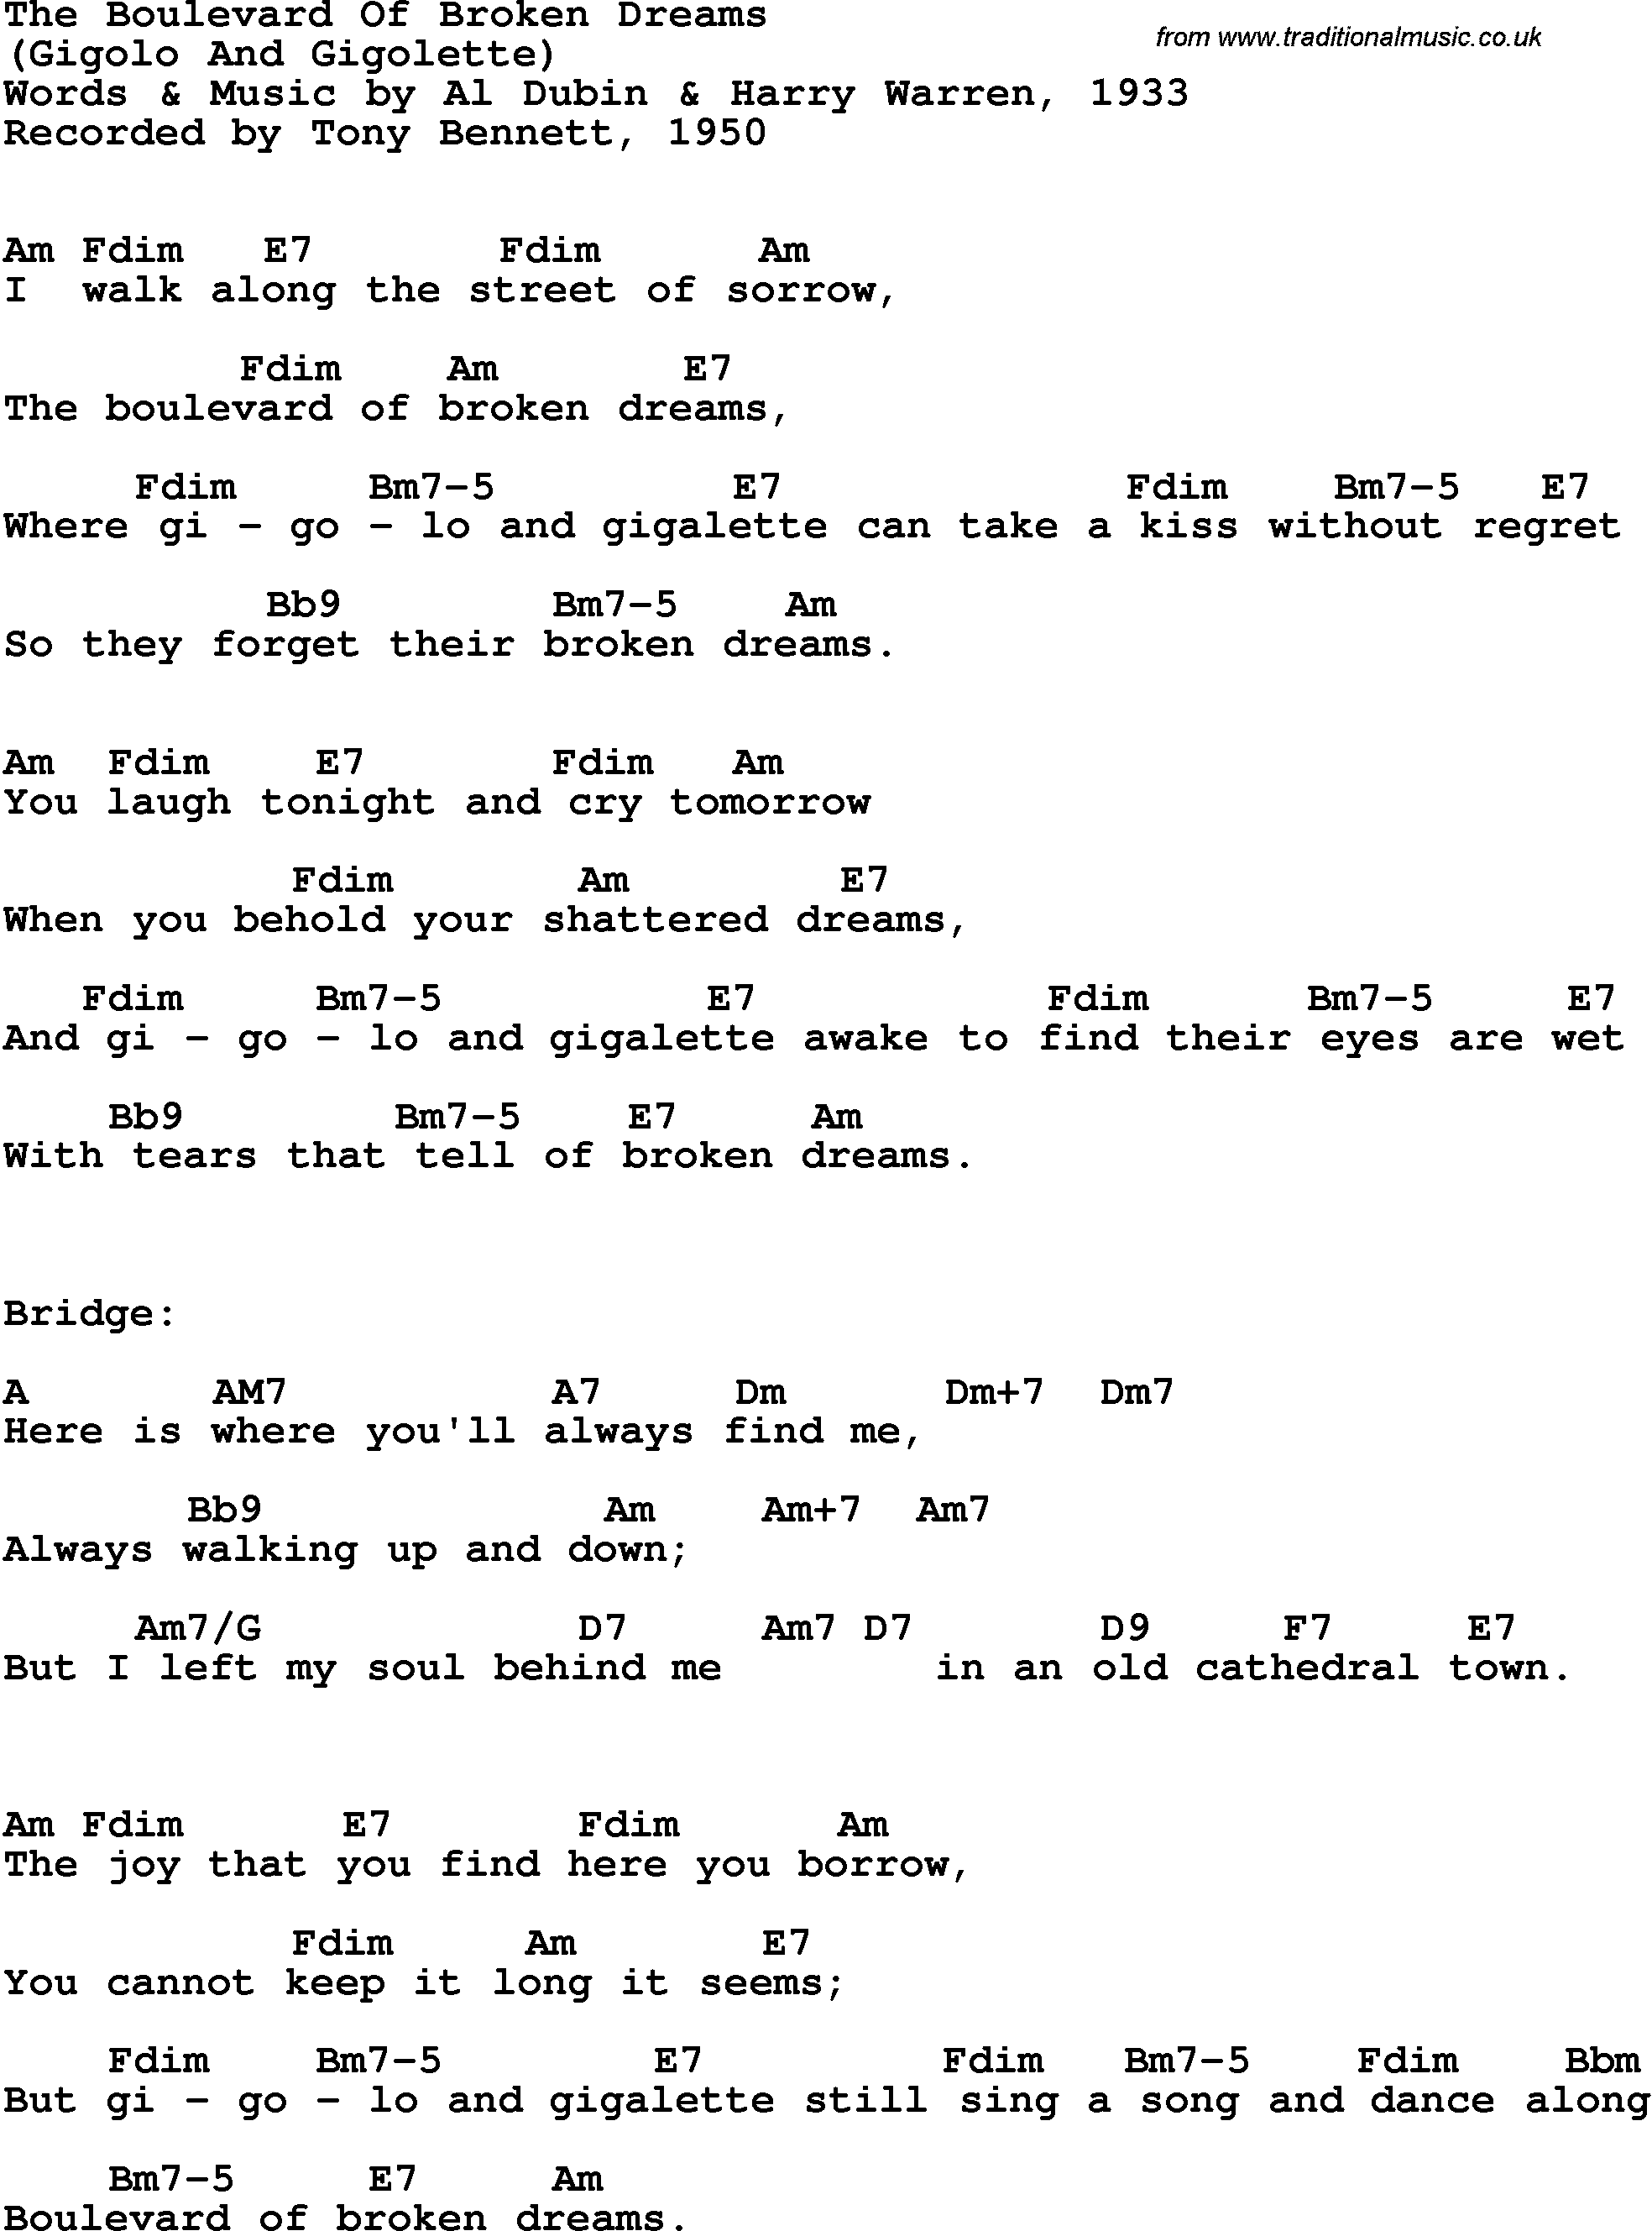 Song Lyrics with guitar chords for Boulevard Of Broken Dreams - Tony Bennett, 1950